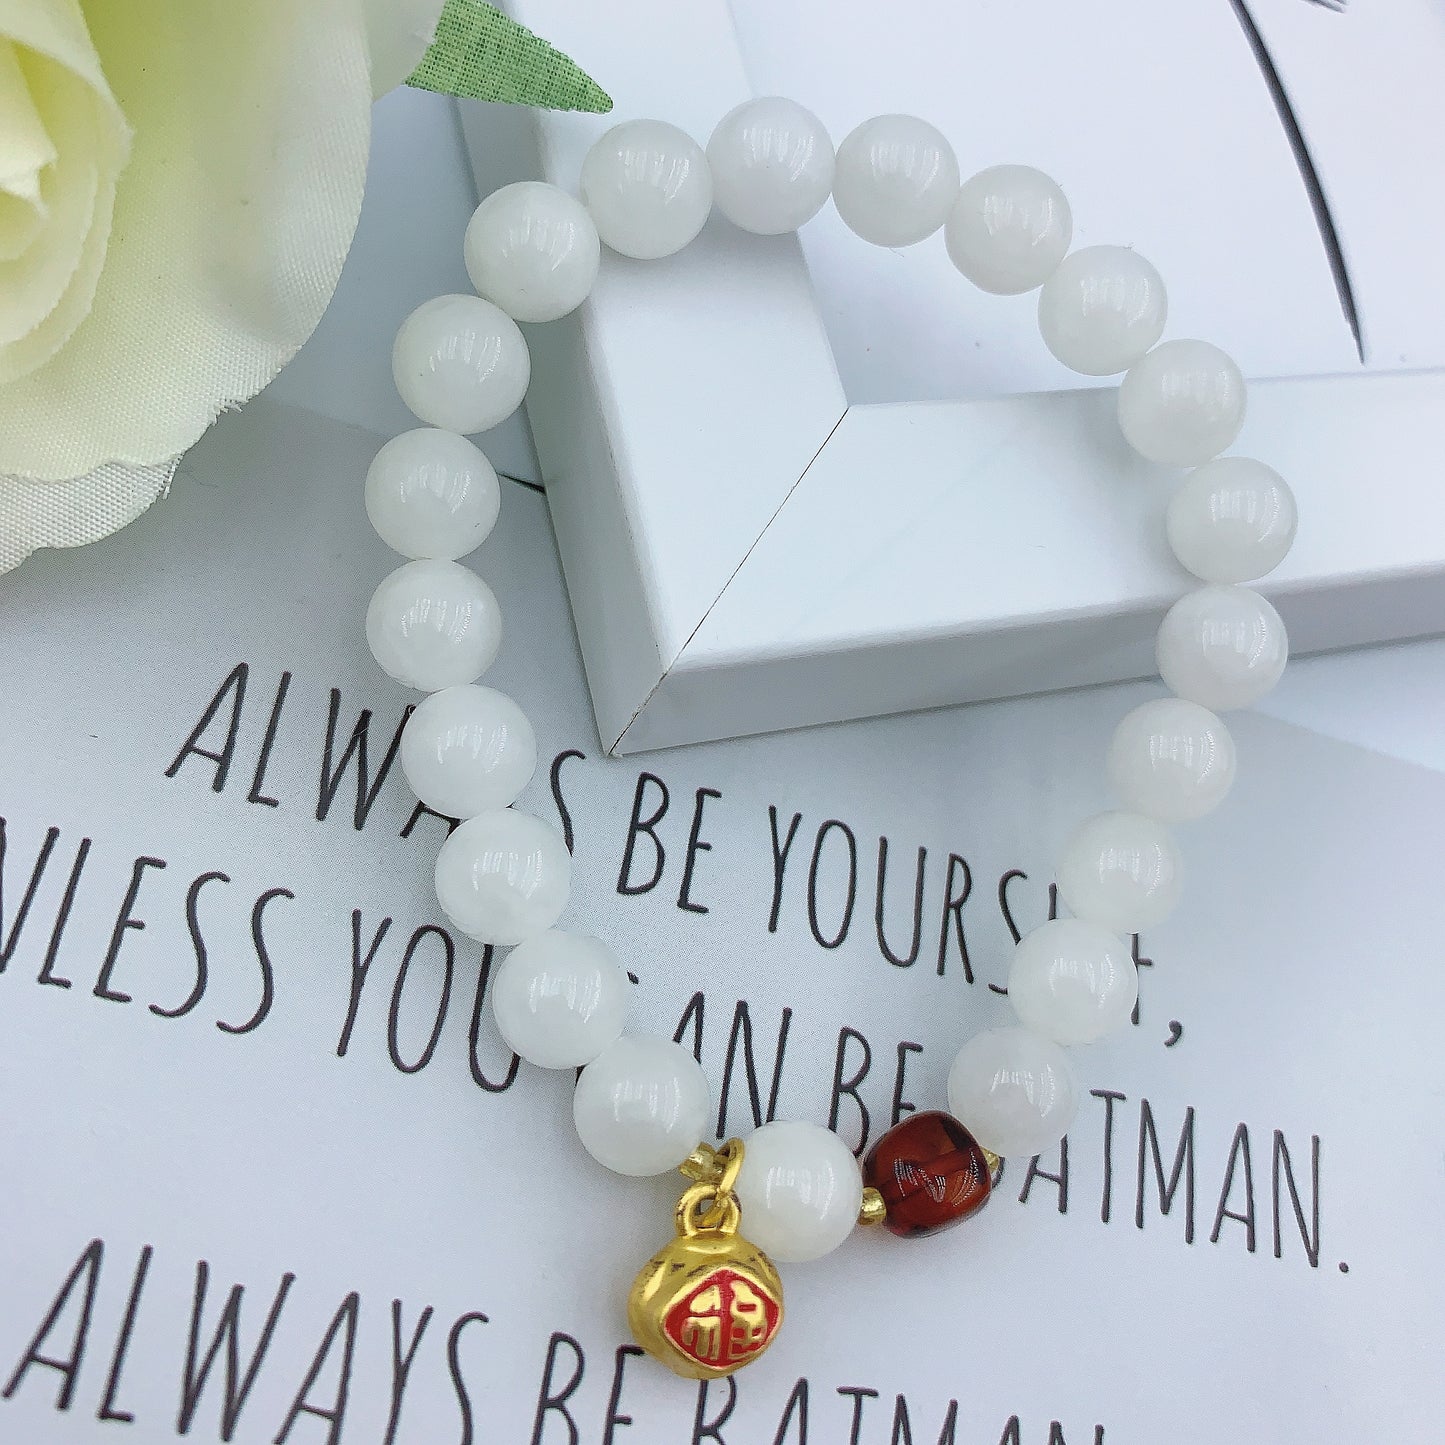 Women's Fashion White Marble Beads Gemstone Bracelet